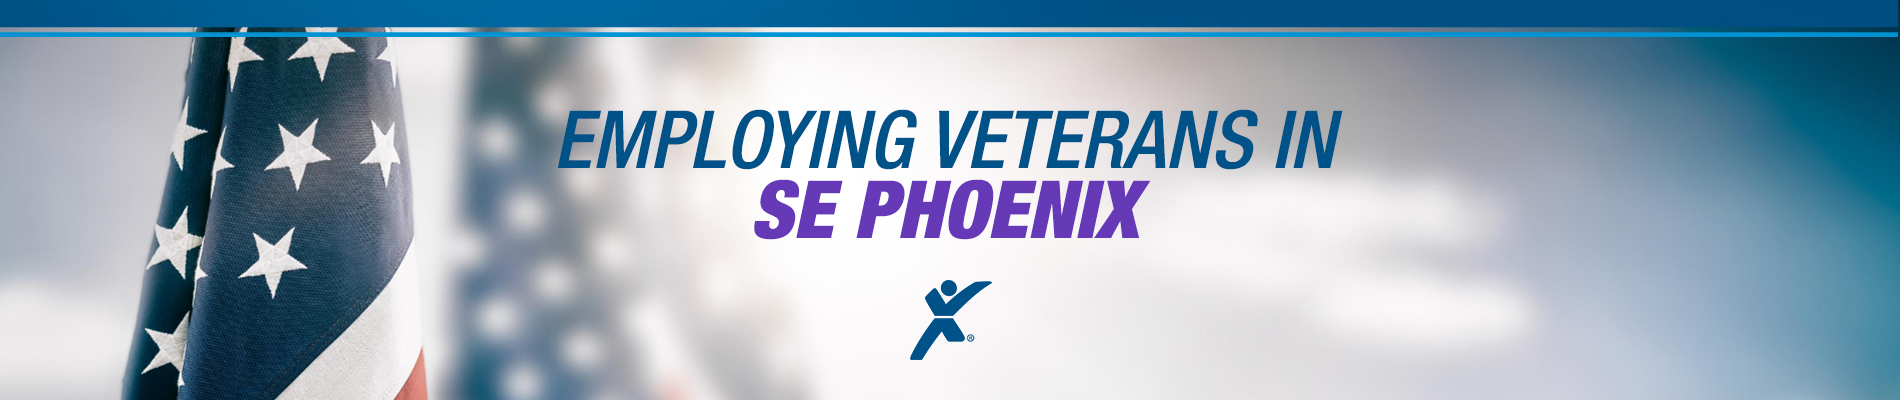 Express SE PHX is Hiring Veterans in Phoenix, Arizona